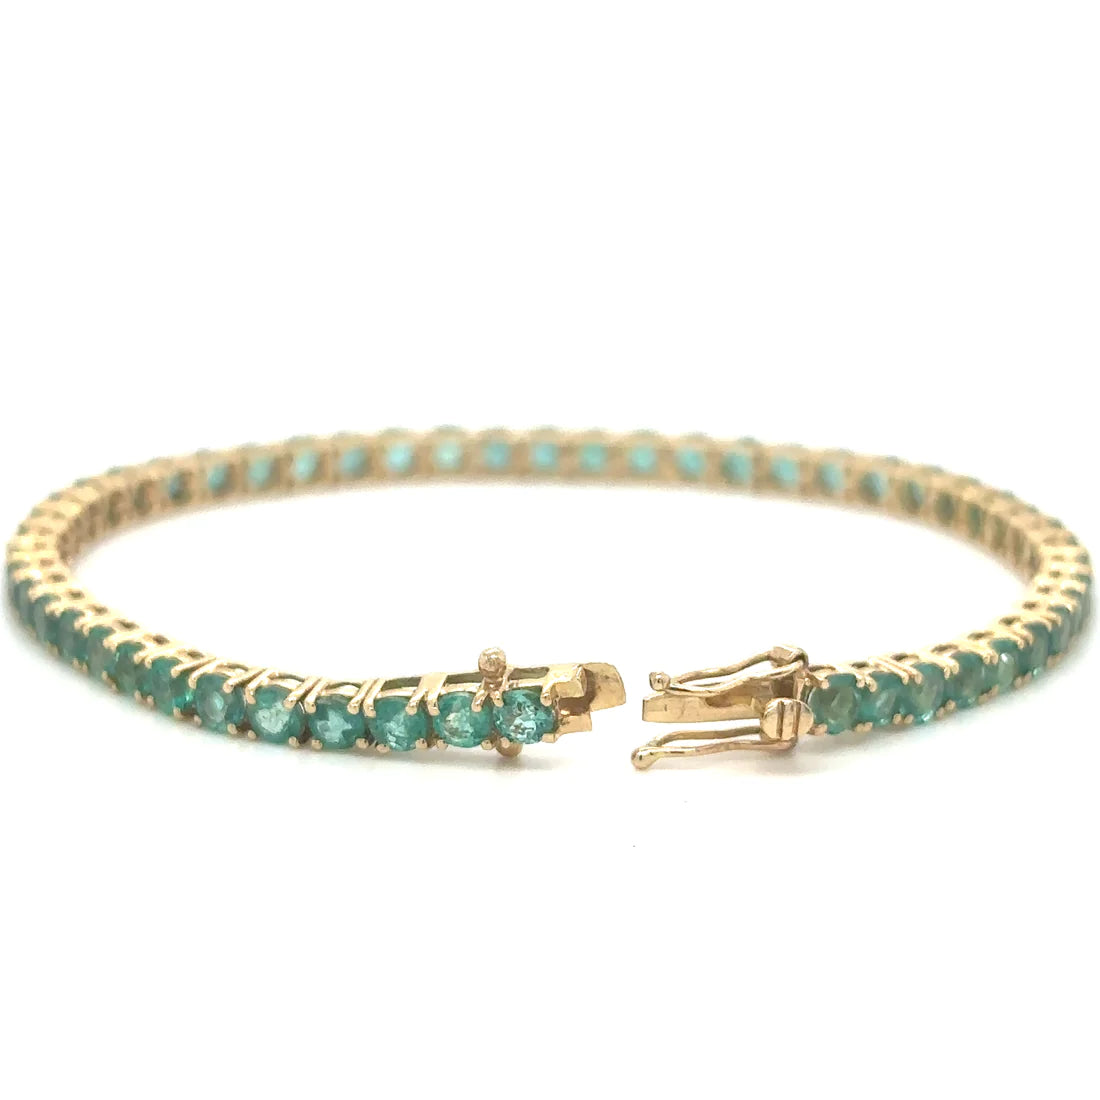 14kt Yellow Gold Emerald Bracelet